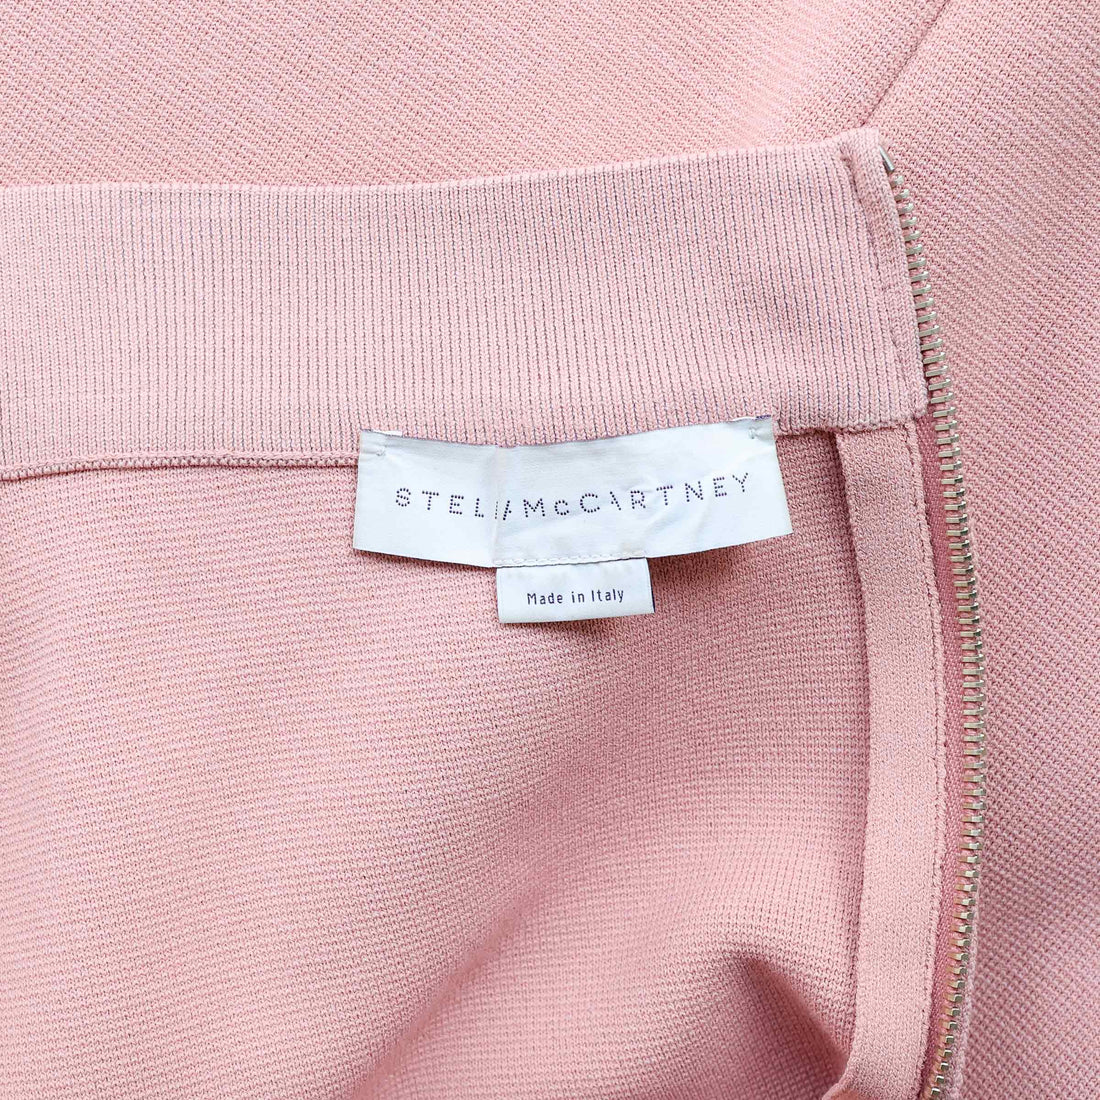 Stella McCartney stretch zip skirt